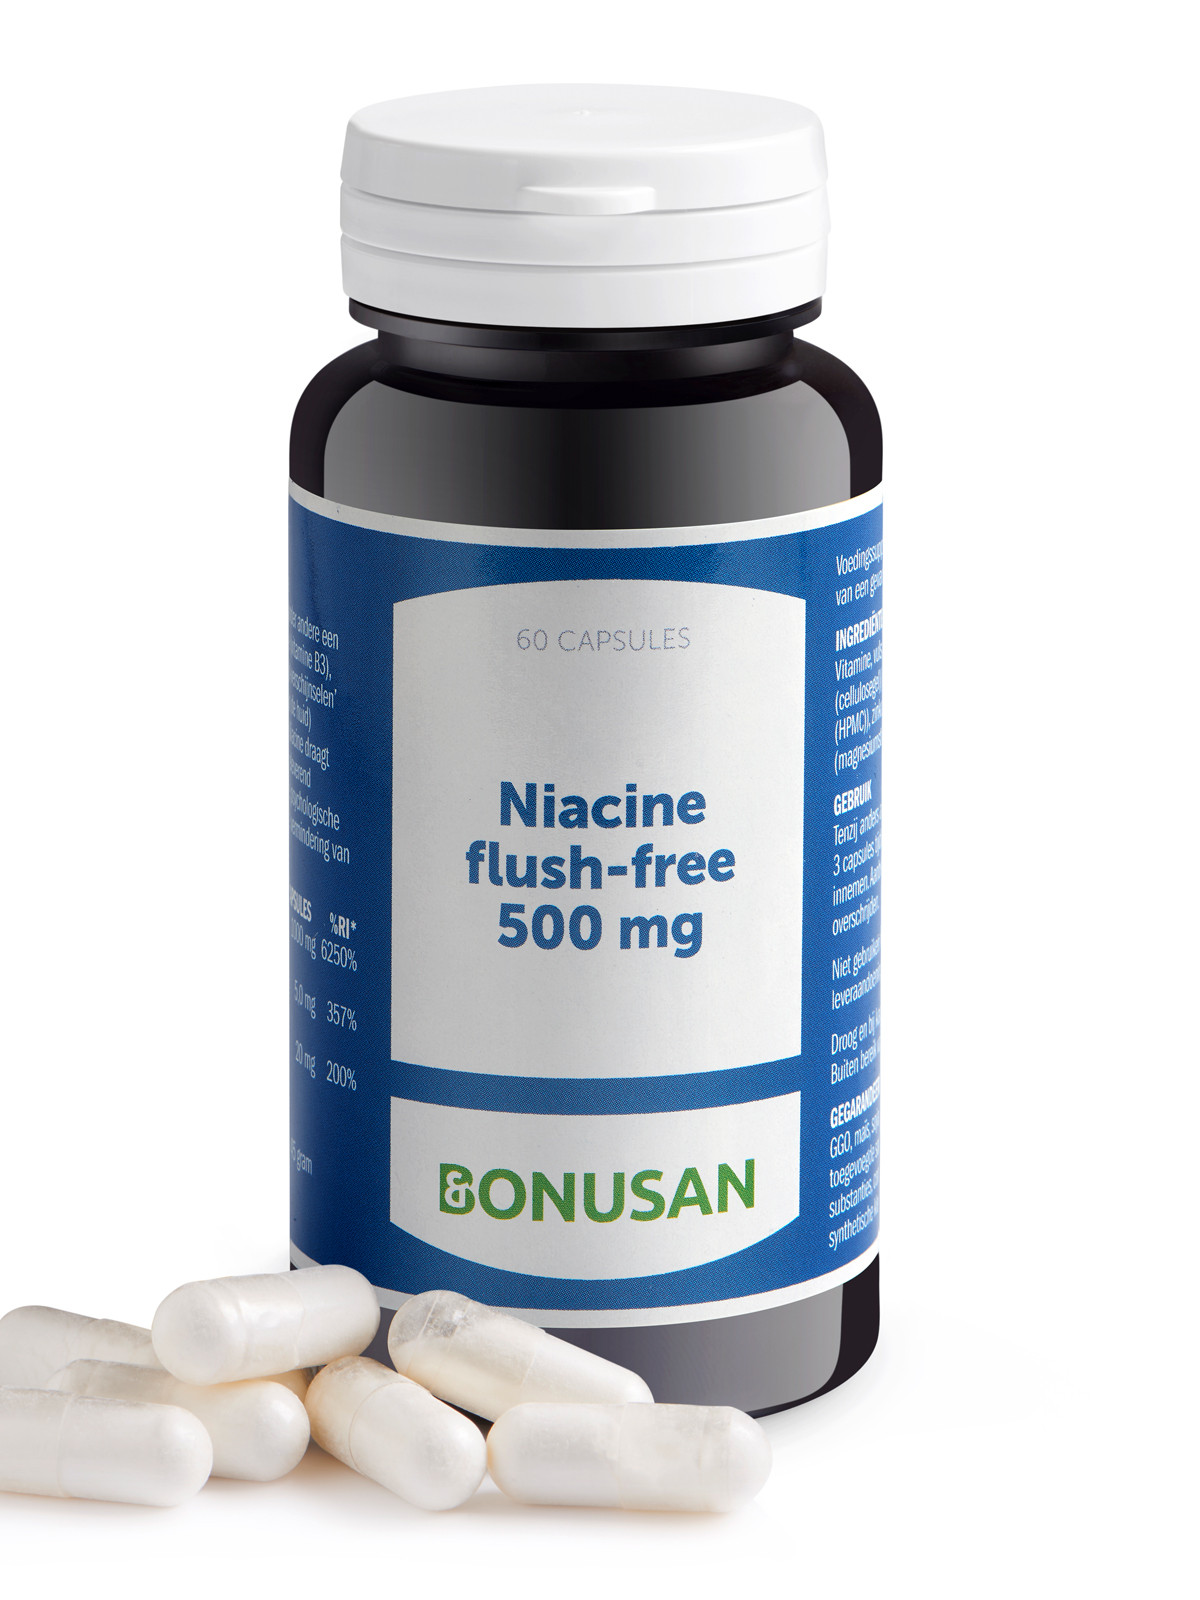 Bonusan - Niacine flush free 500 mg